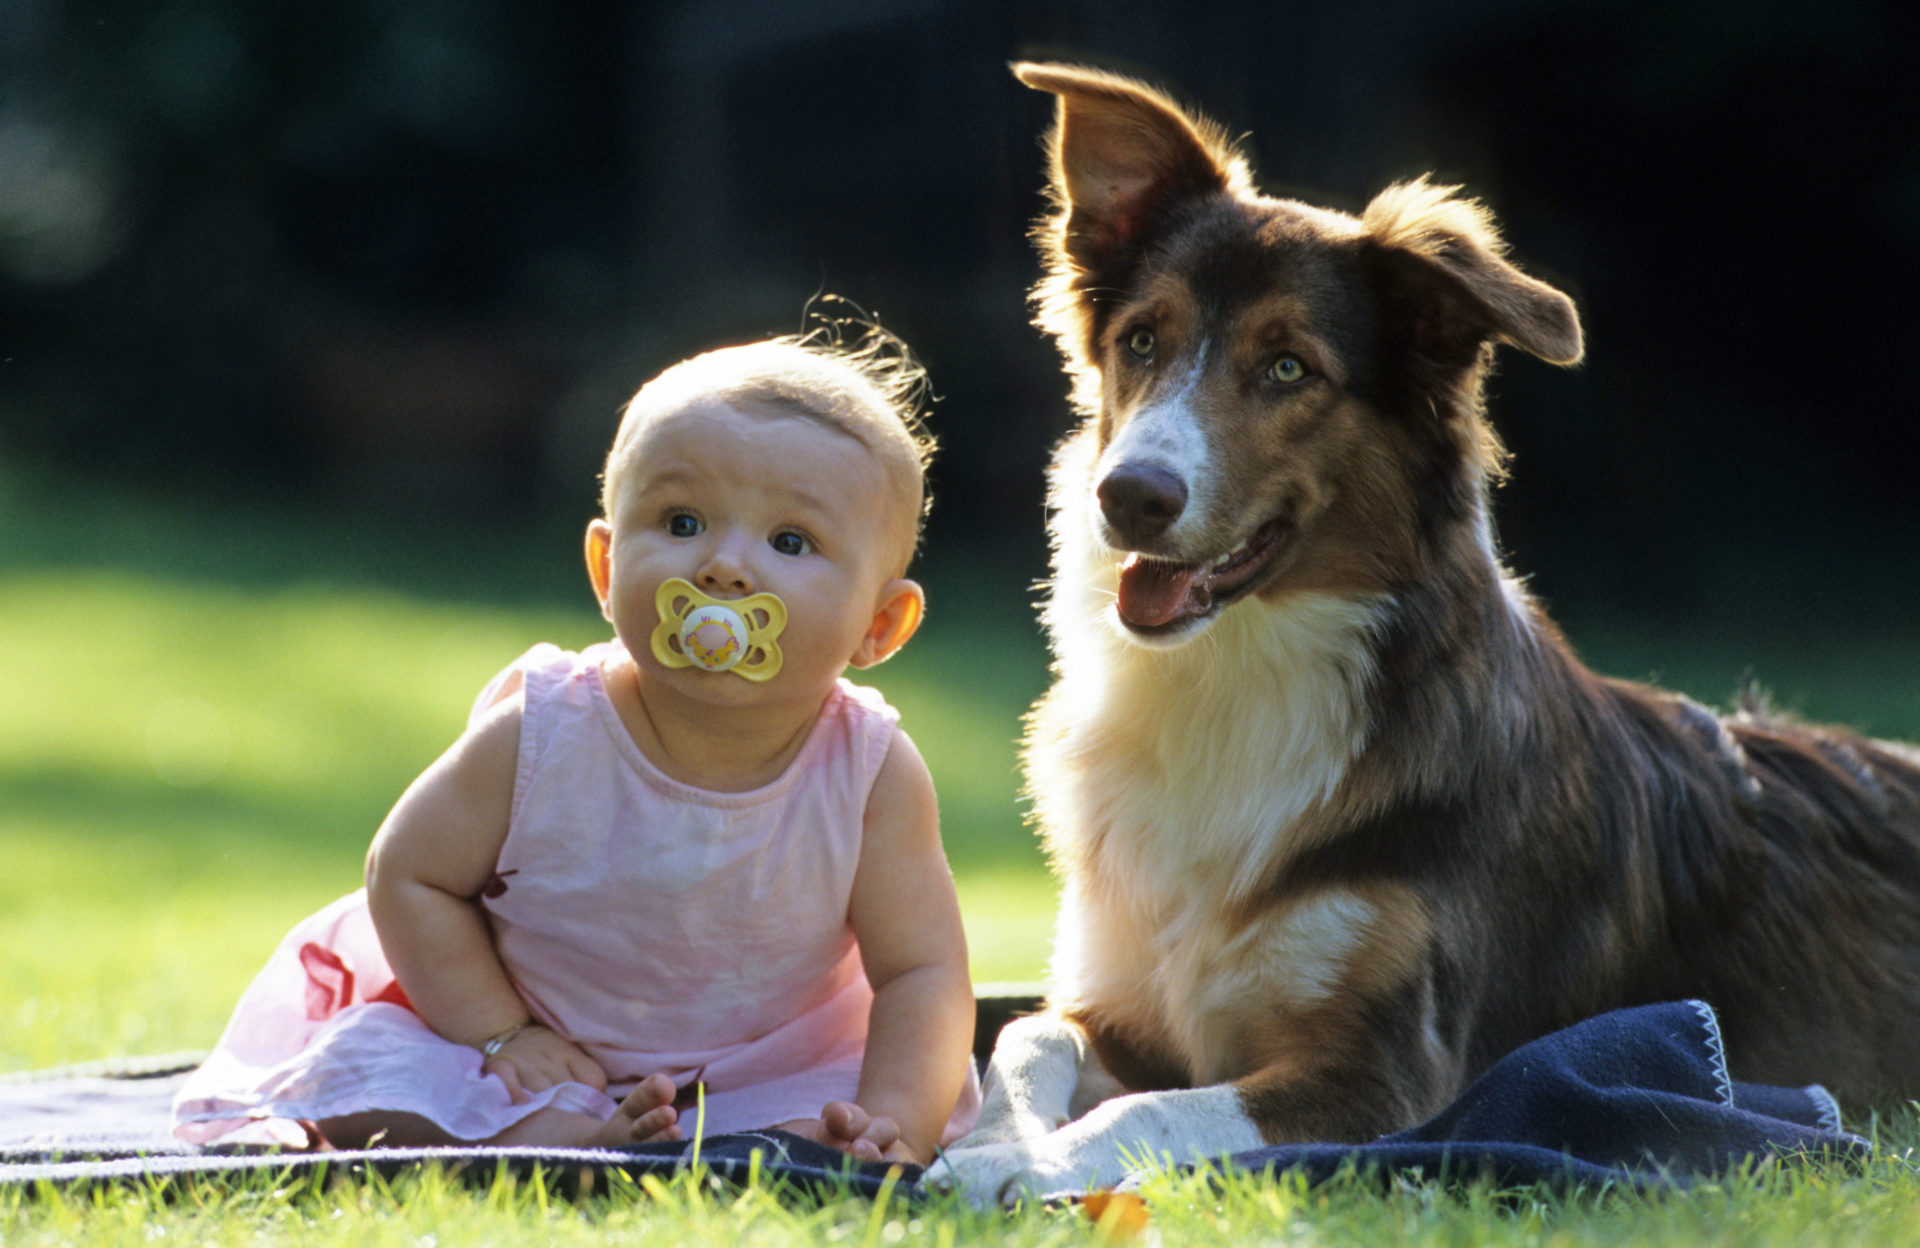 Australian Shepherd on the lawn with a baby. Image: WILDLIFE GmbH / Alamy